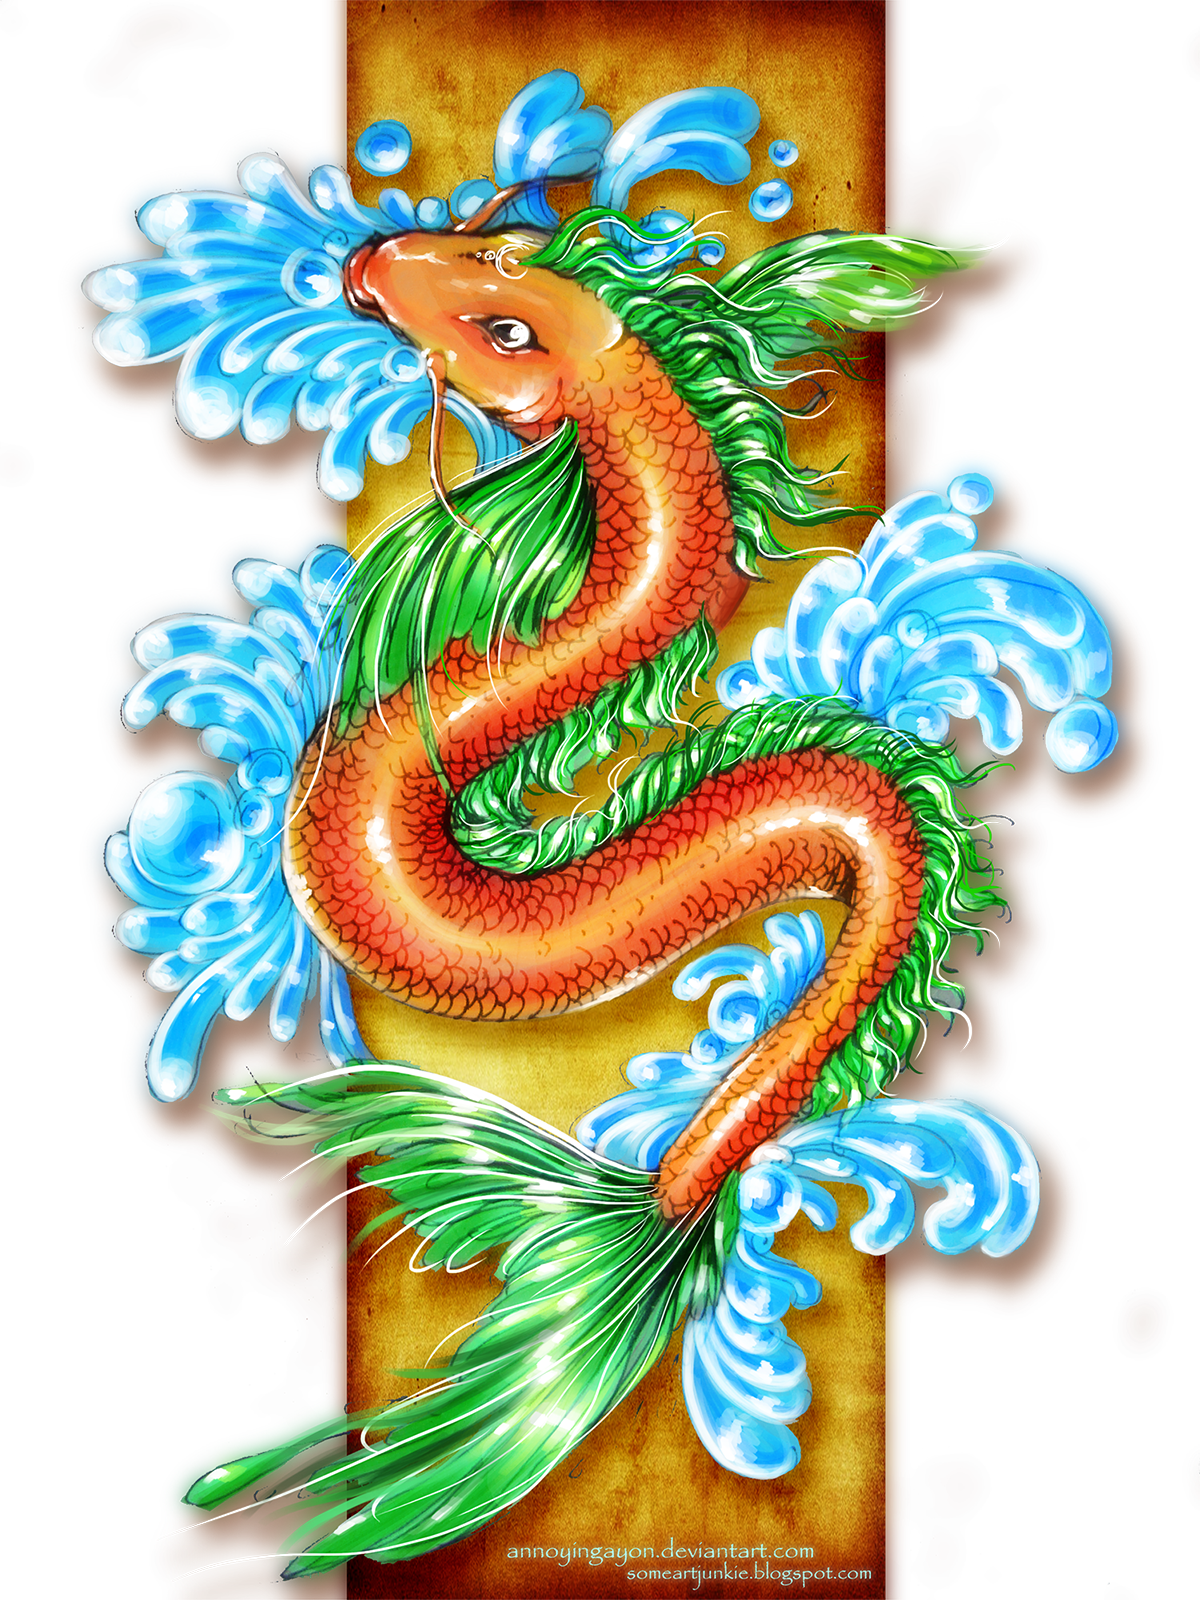 someartjunkie blog: Koi Dragon